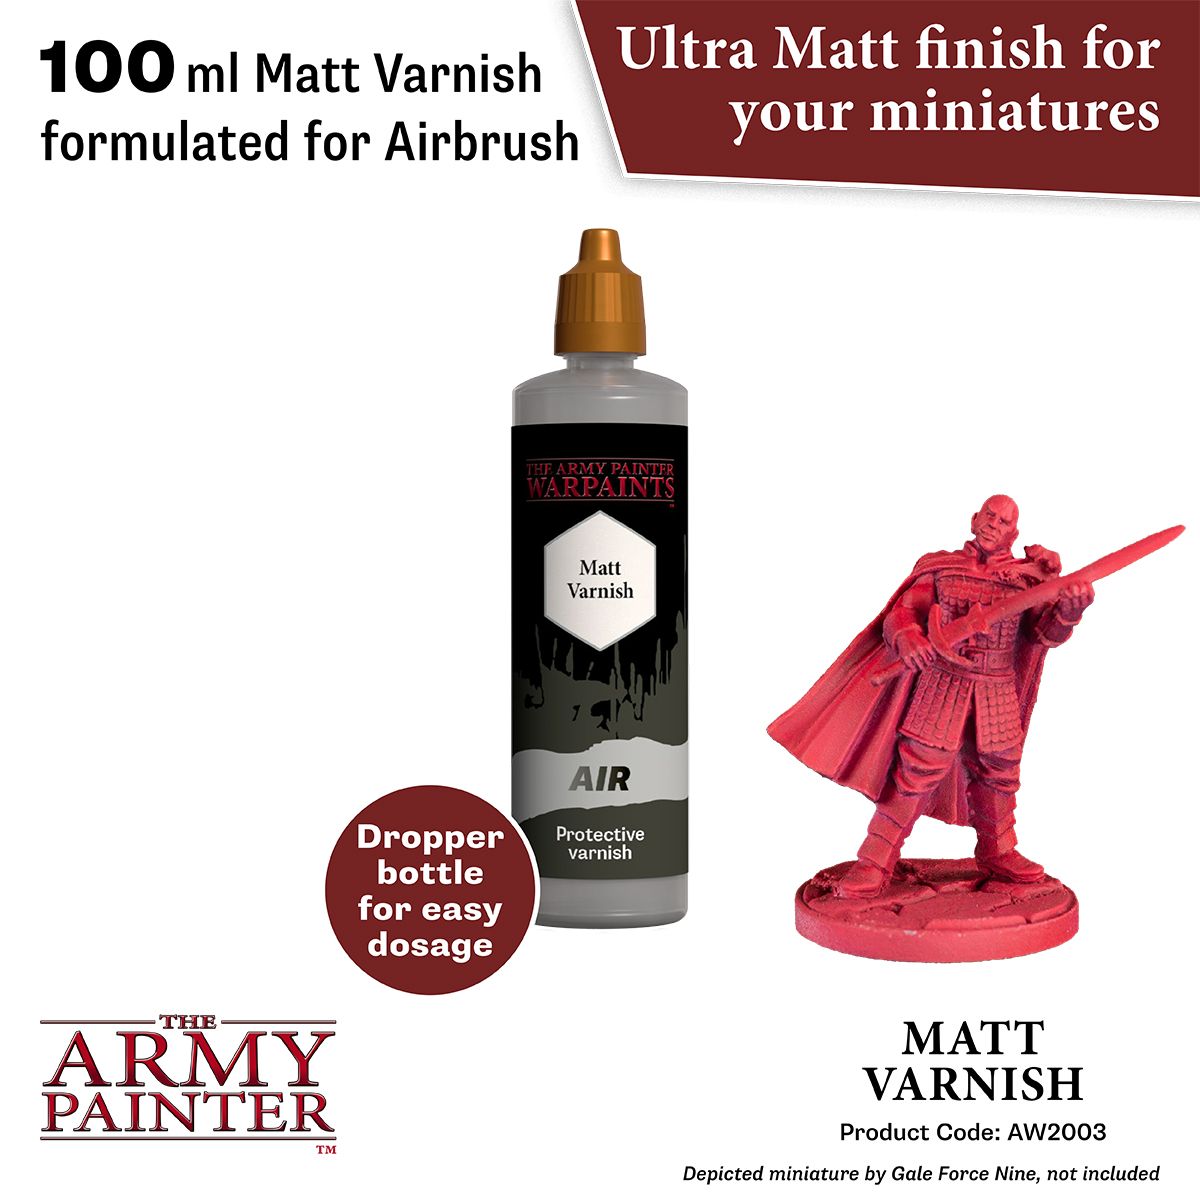 Warpaints air: Anti-shine varnish - 100 ml